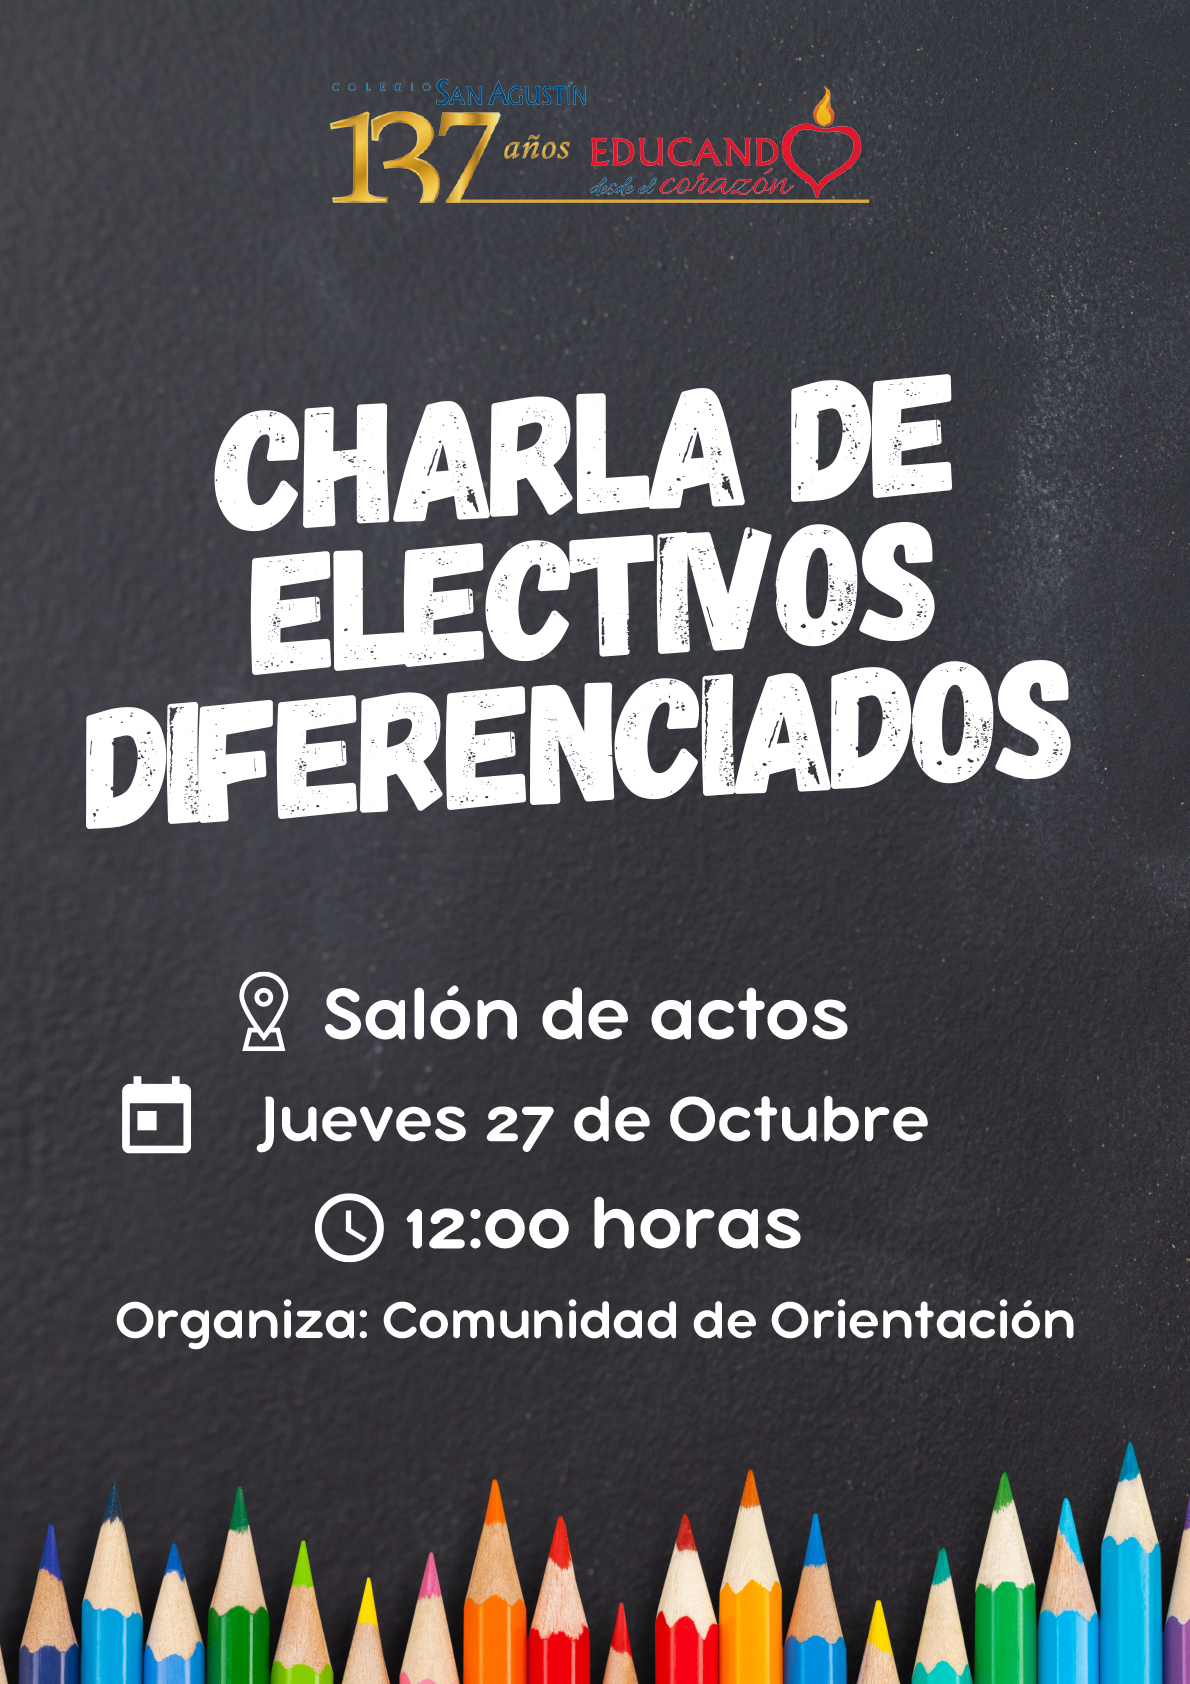 https://www.colegiosanagustin.cl/wp-content/uploads/2022/10/Afiche-de-Charla-de-Electivos-Diferenciados-1.jpg